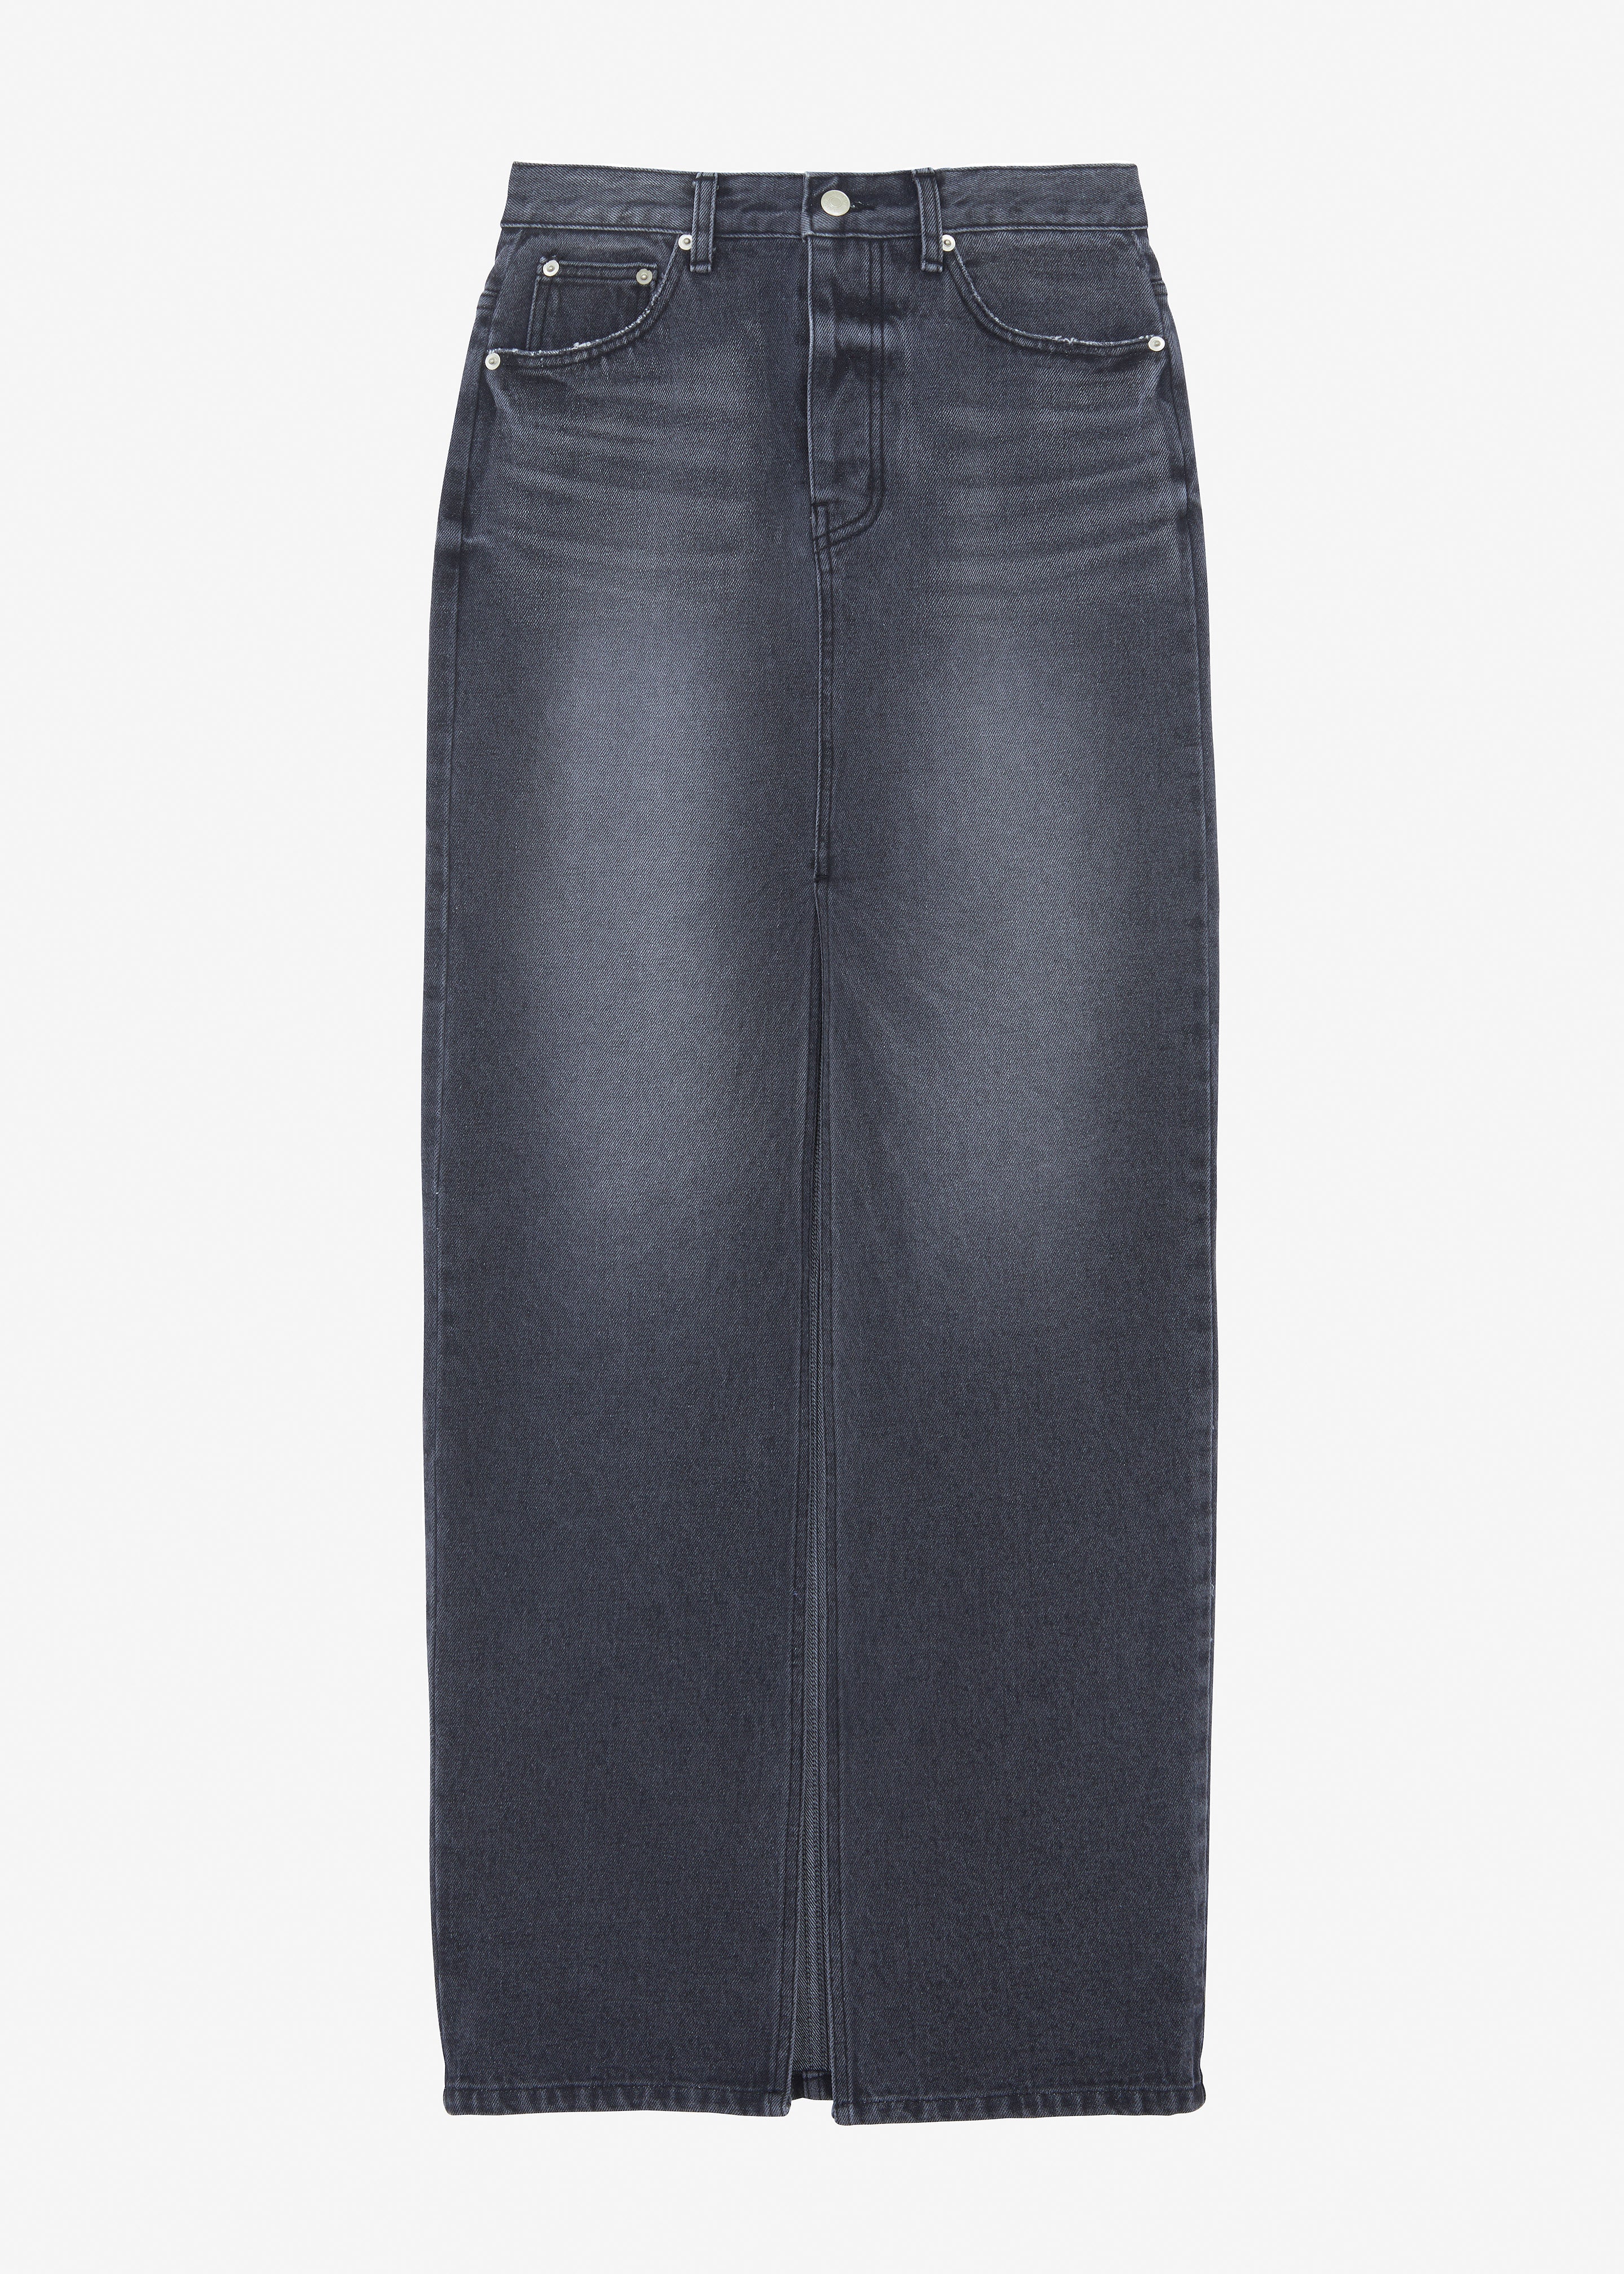 Texas Denim Pencil Skirt - Dark Grey - 8